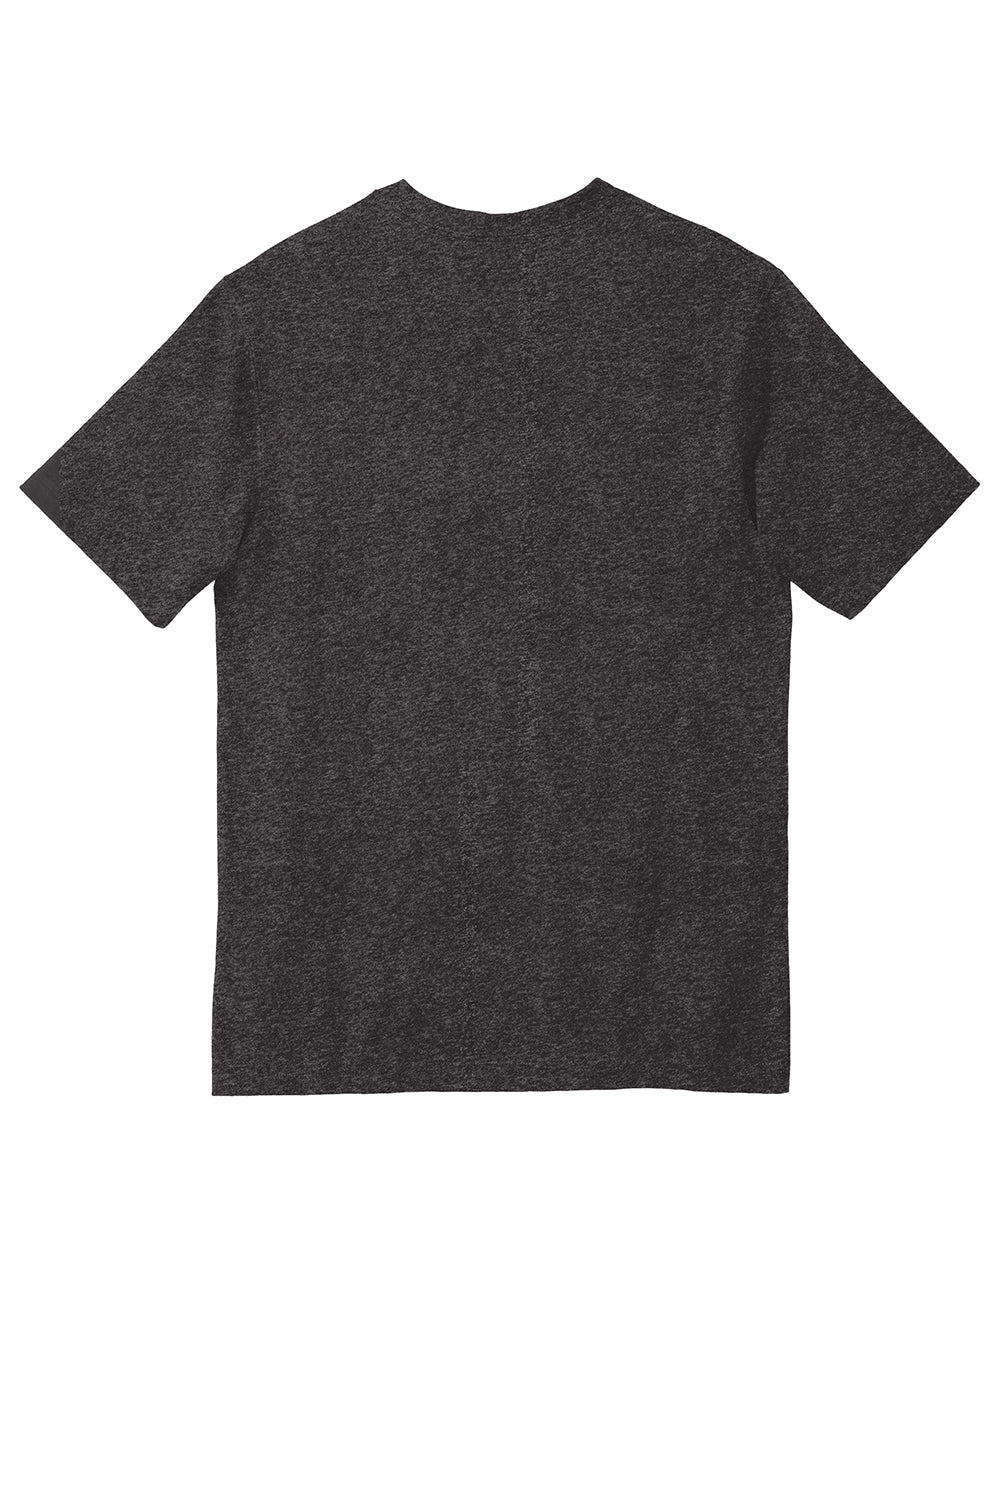 Carhartt CTK87/CTTK87 Mens Workwear Short Sleeve Crewneck T-Shirt w/ Pocket Heather Carbon Grey Flat Back